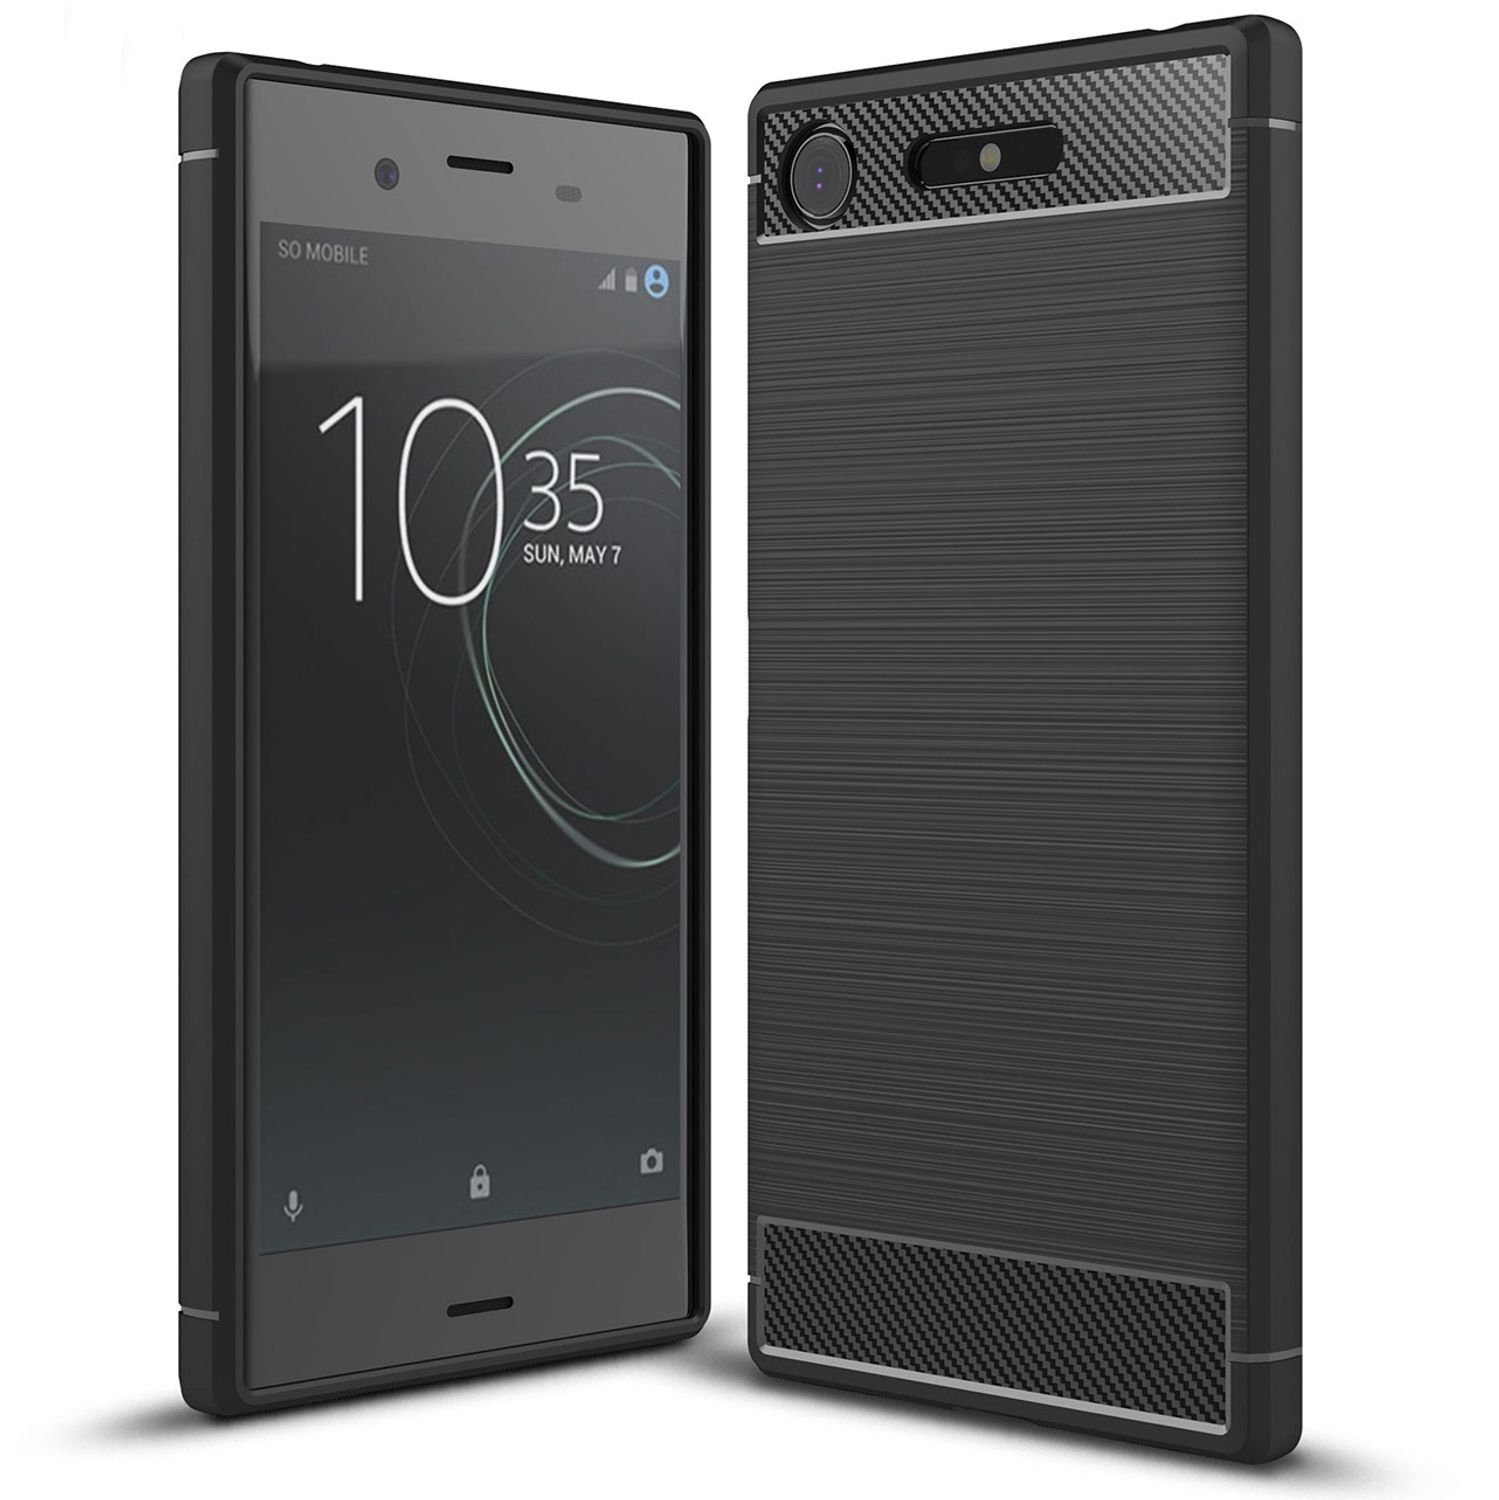 Nalia Smartphone-Hülle Sony Xperia XZ1, Carbon Look Silikon Hülle / Matt Schwarz / Rutschfest / Karbon Optik